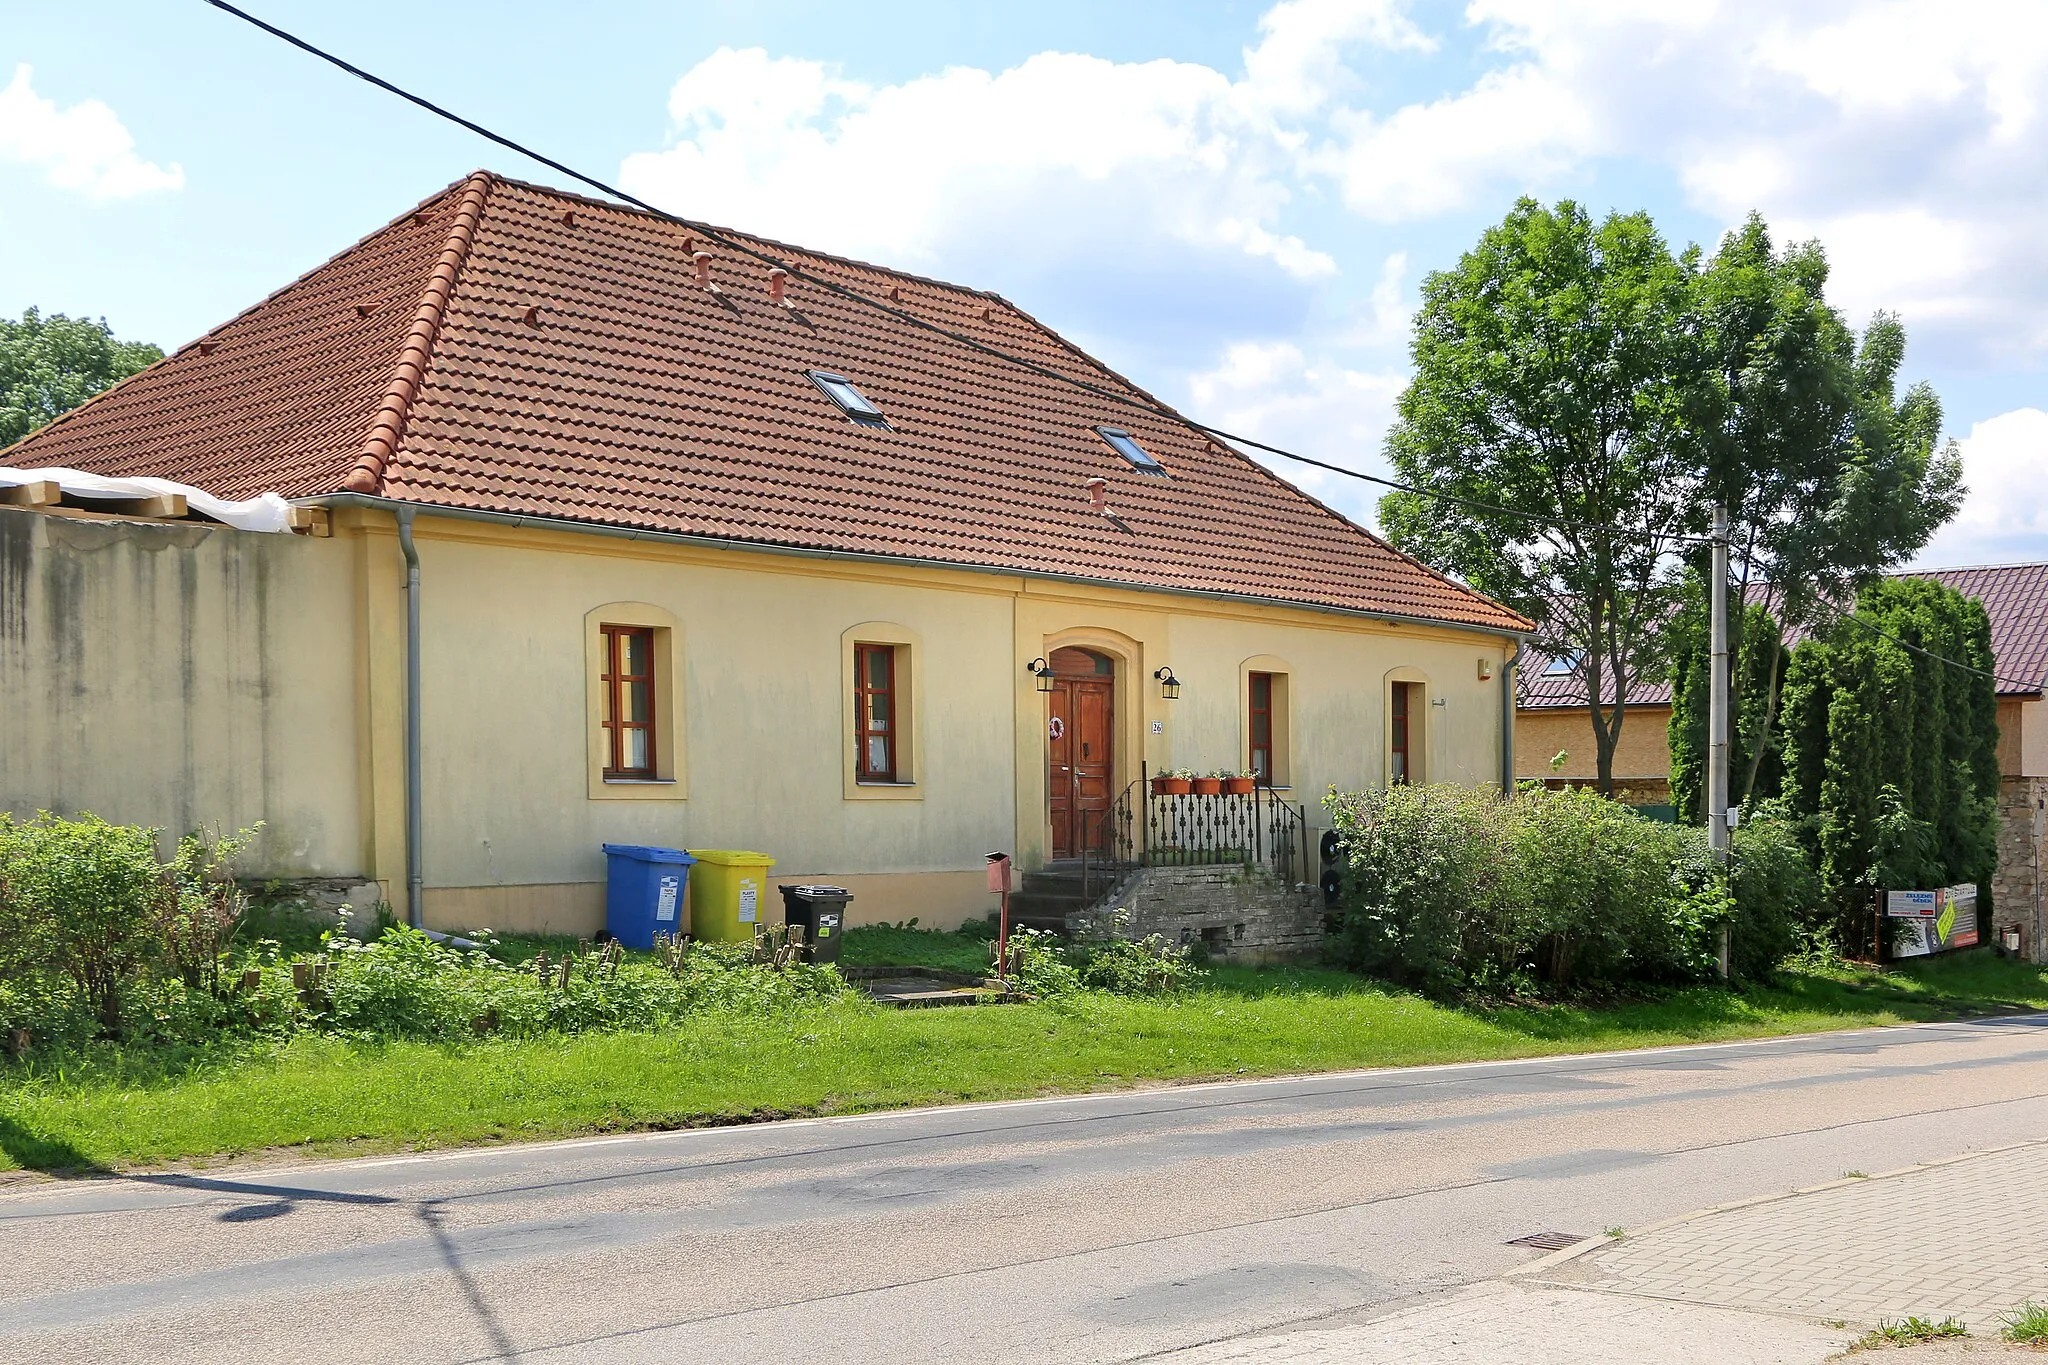 Photo showing: House No 26 at Soběhrdy, Czech Republic.